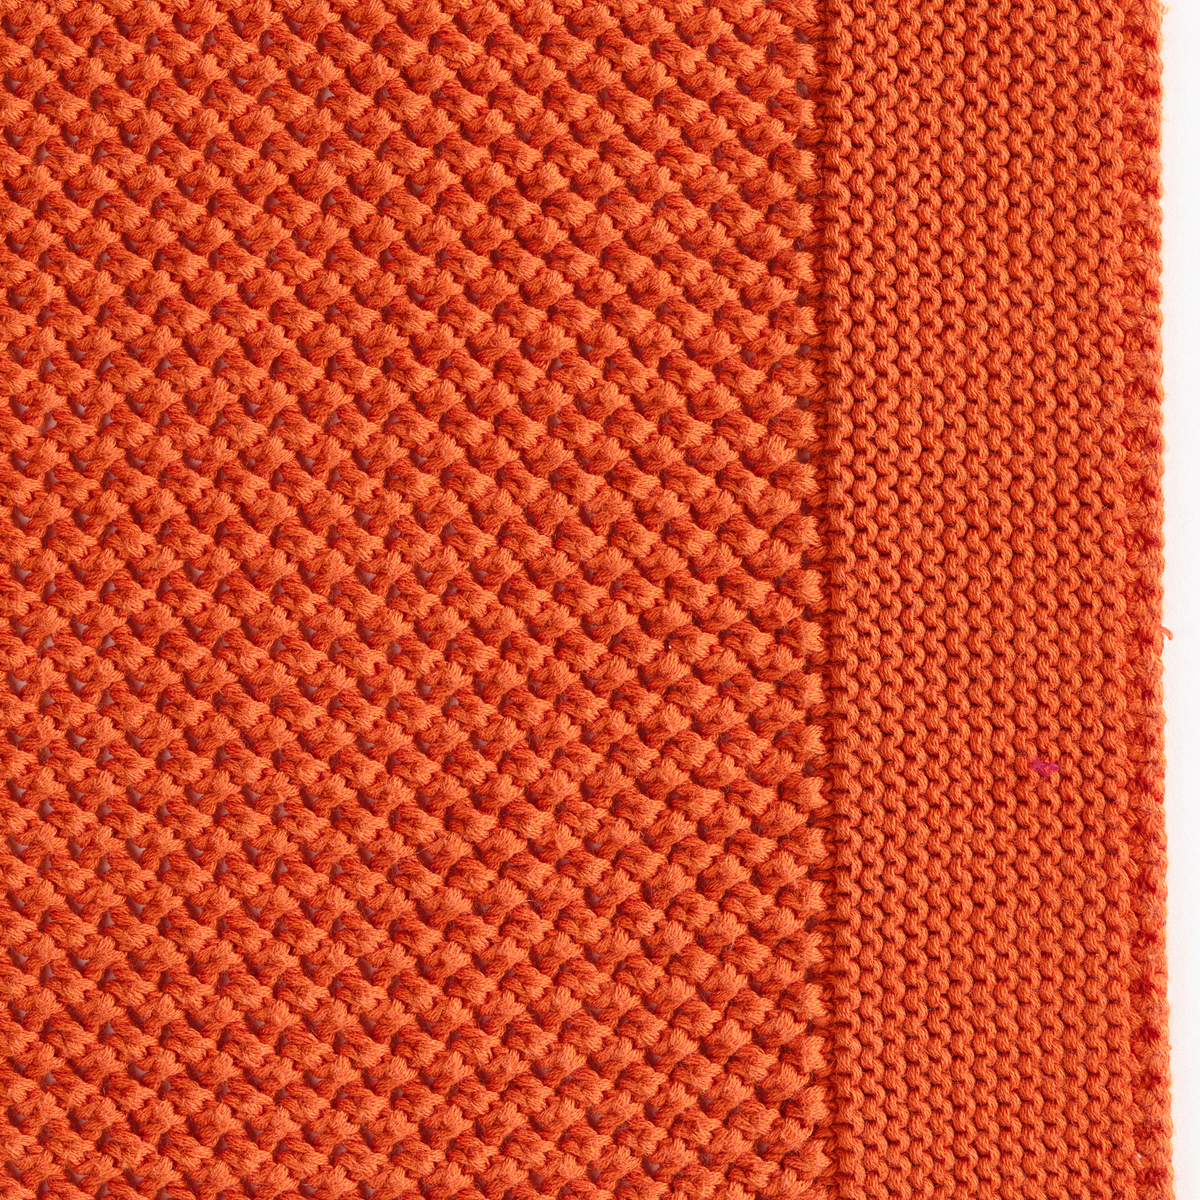 Swatch Sample of Celso de Lemos Balade Throw in Orange Color